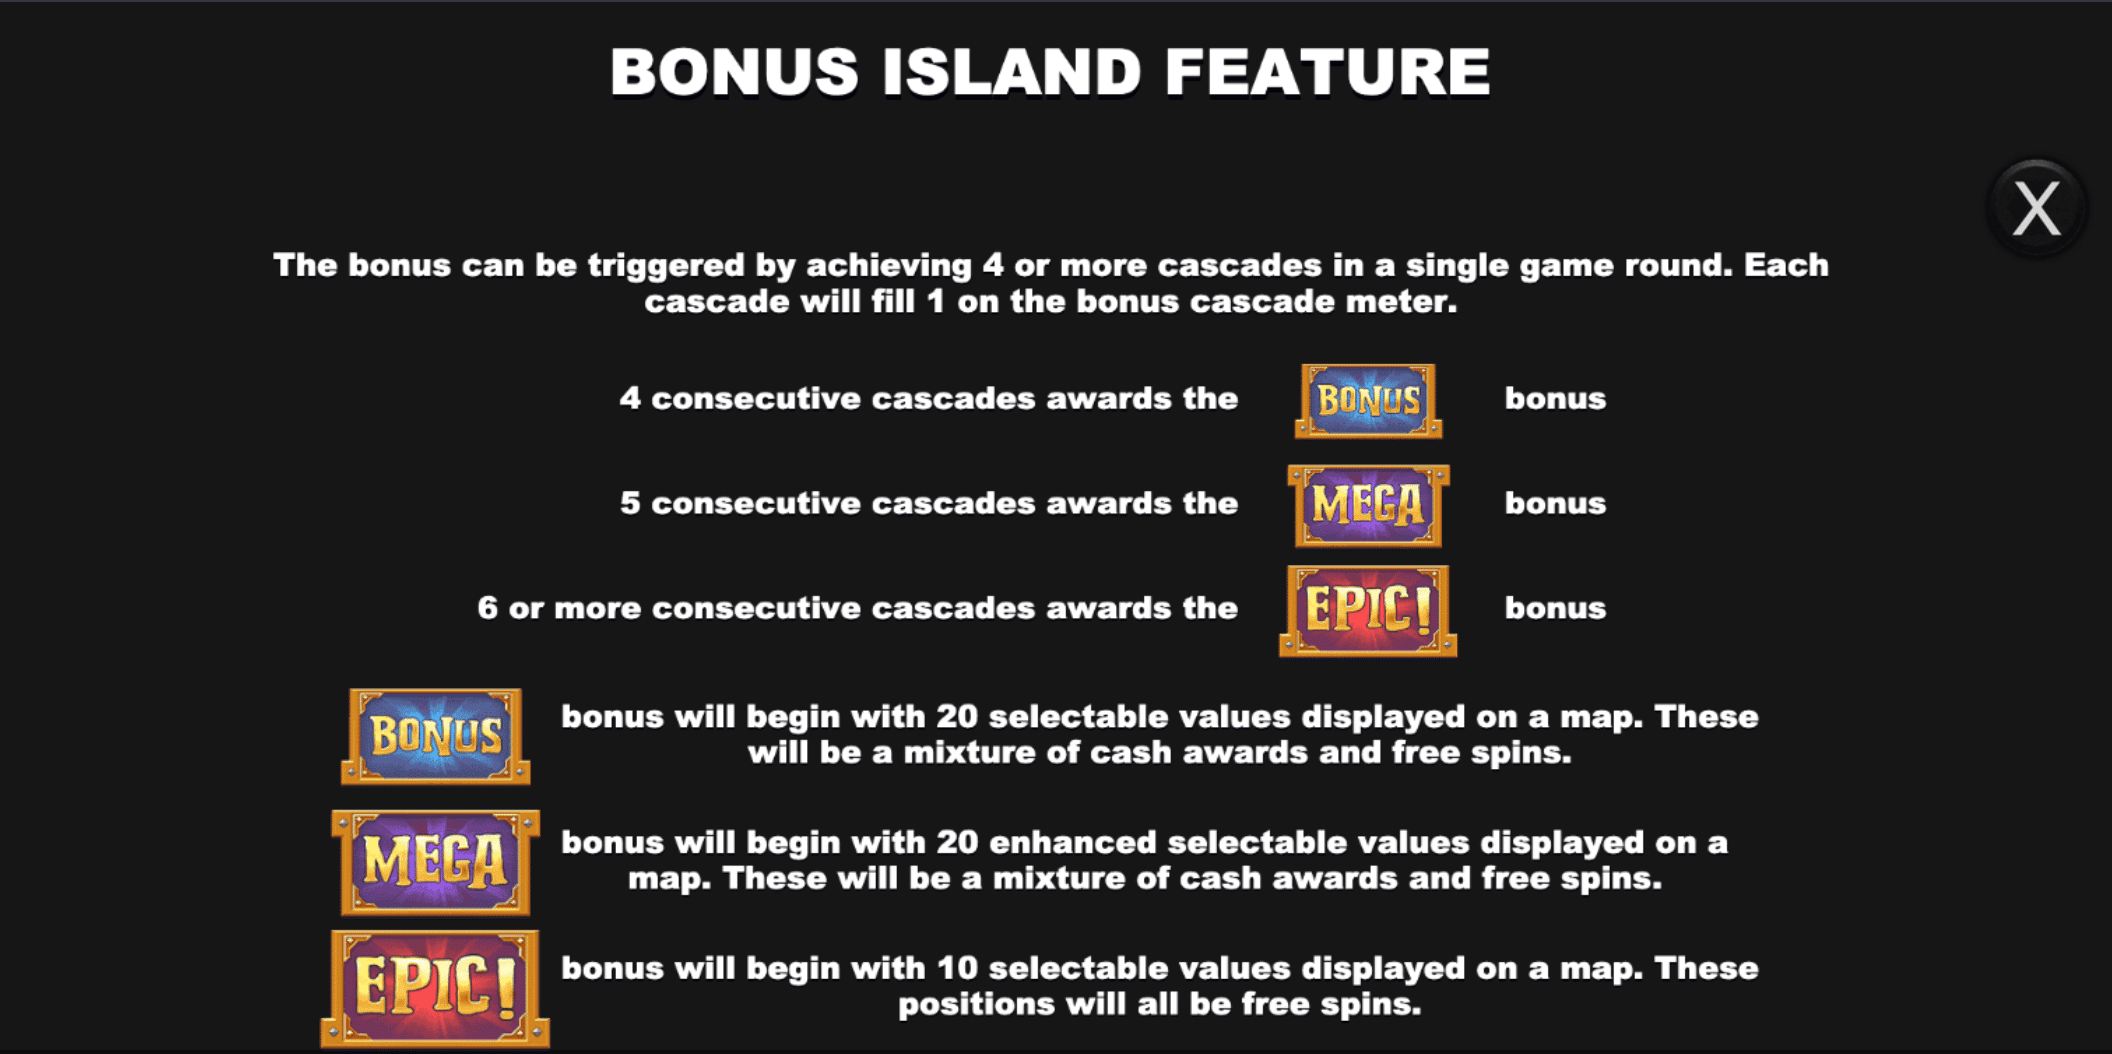 Bonus Island Bonus Feature